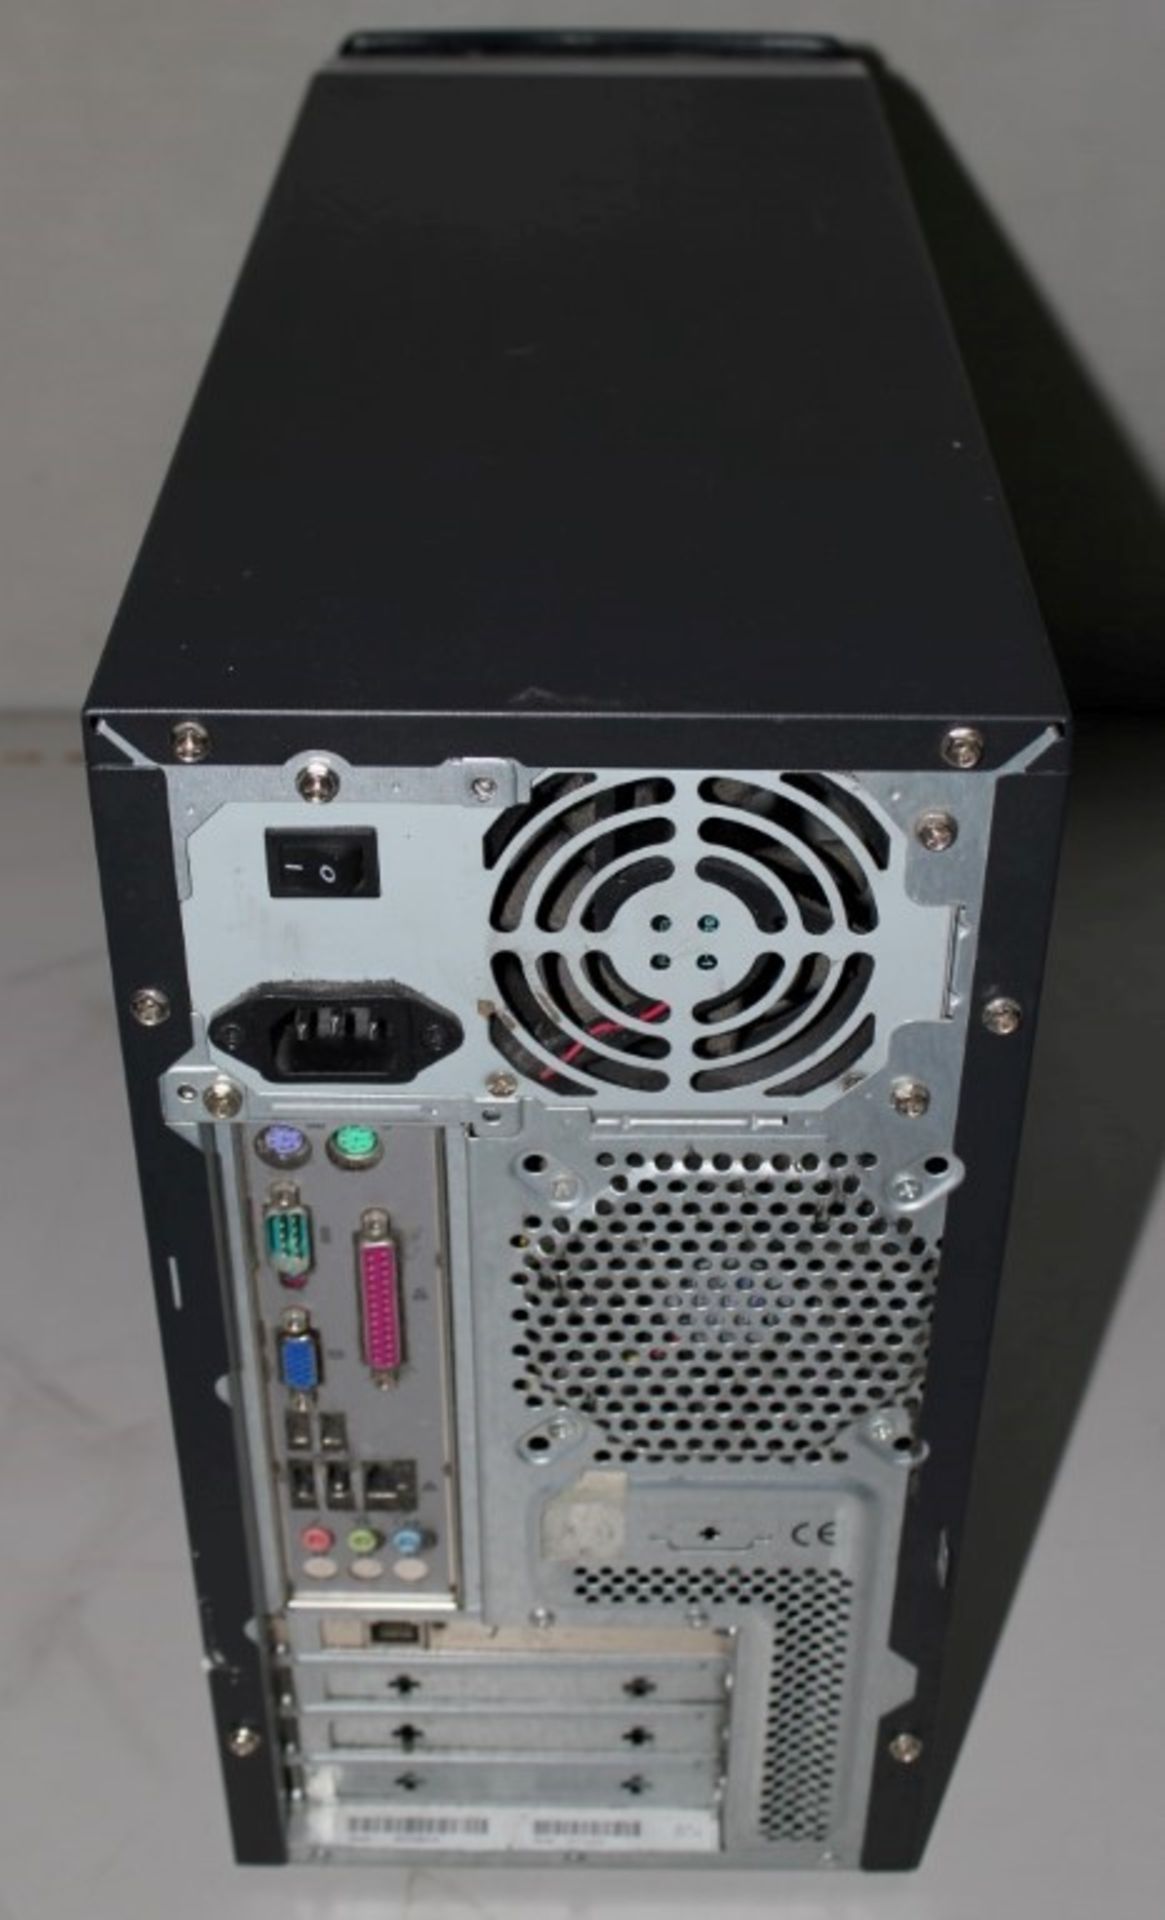 1 x Zoostorm Desktop Computer With Foxconn 45CS Mini-ITX Motherboard, Intel Atom 1.6ghz Processor, - Image 2 of 3